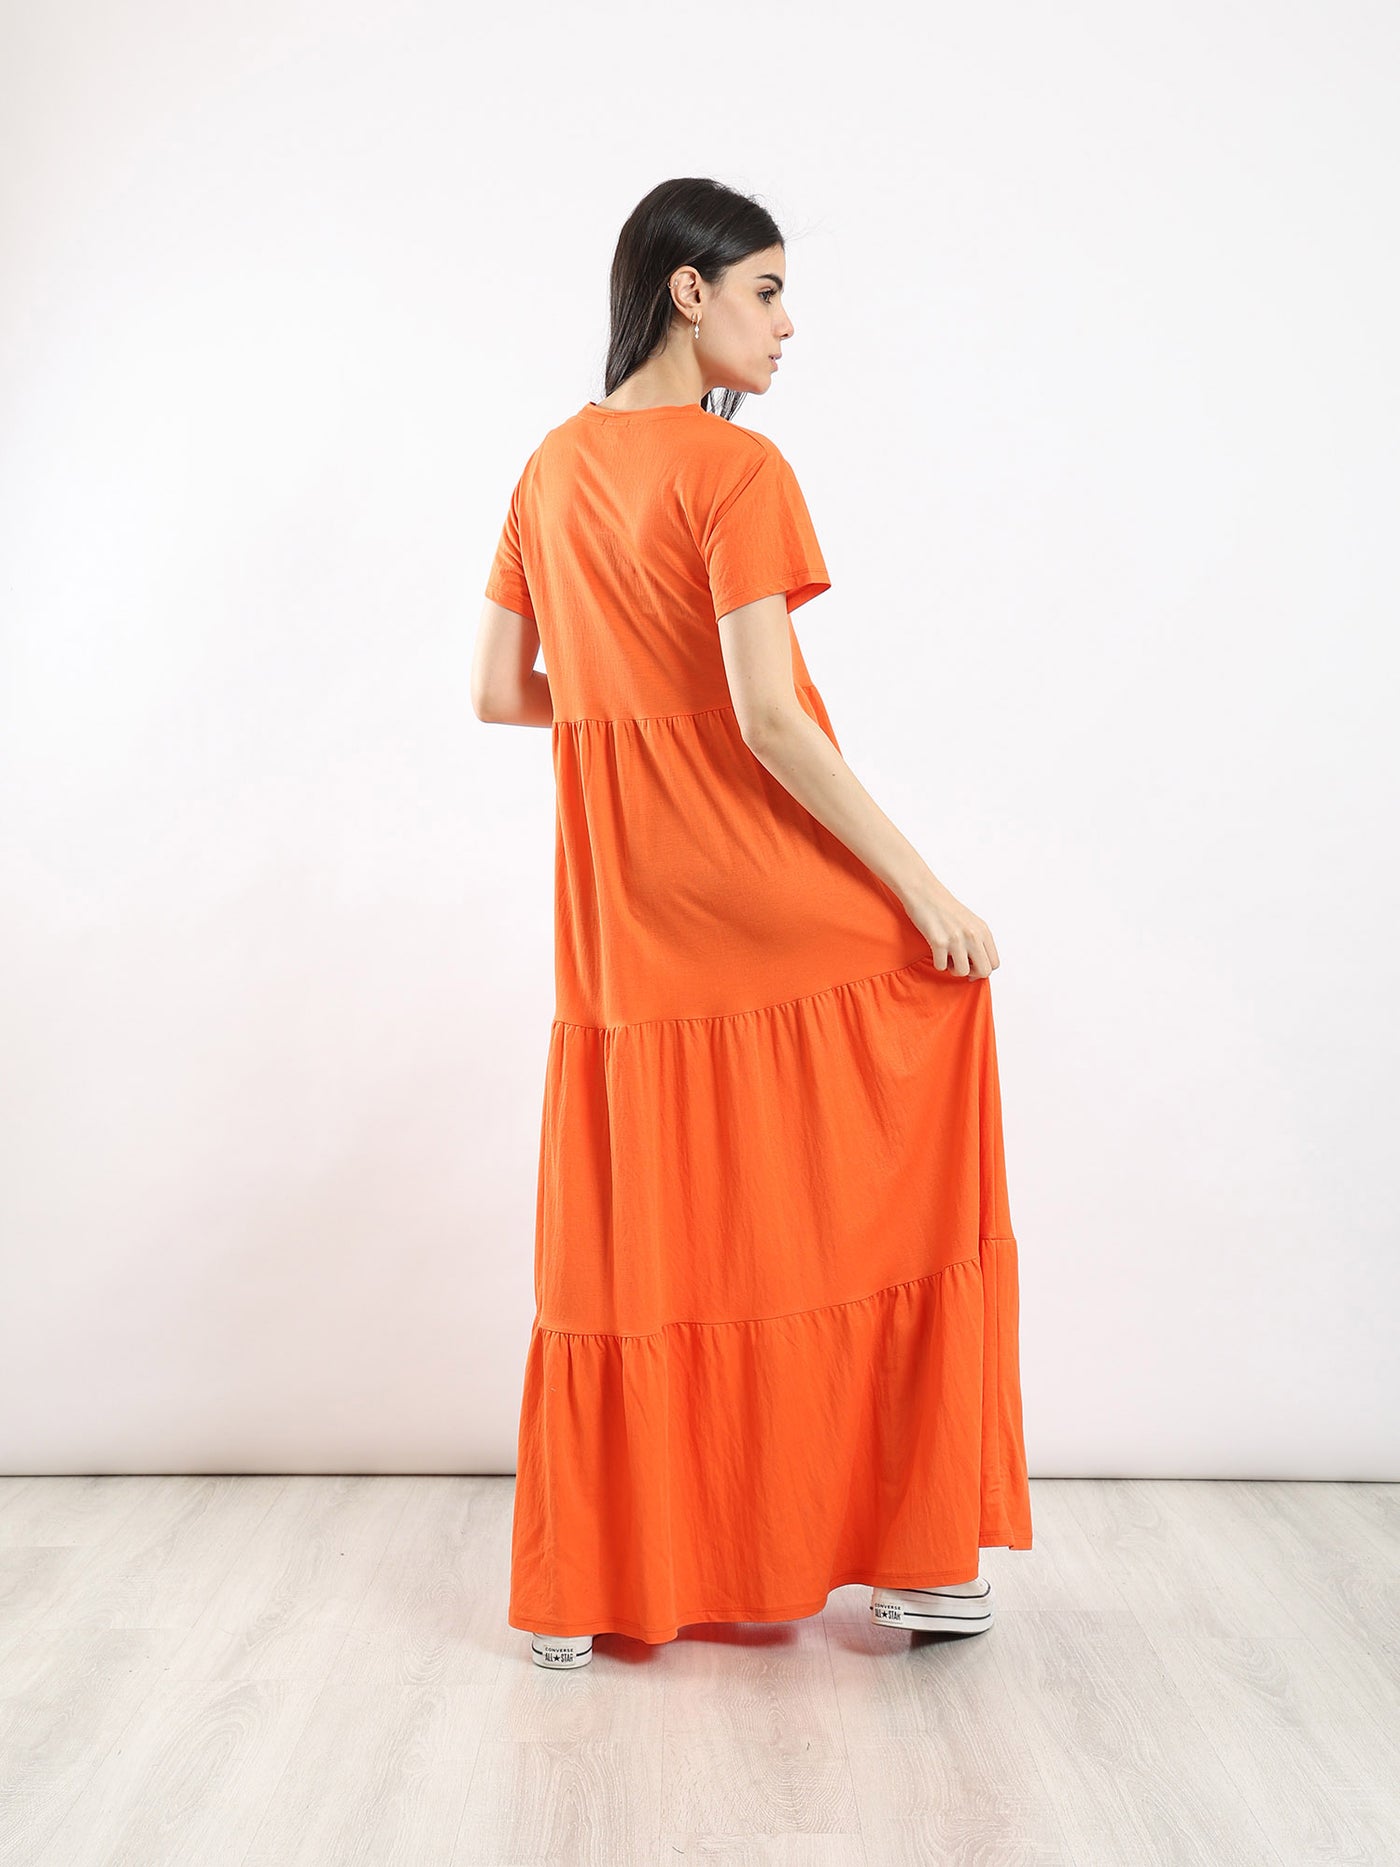 Dress - Frill Design - Half Sleeve